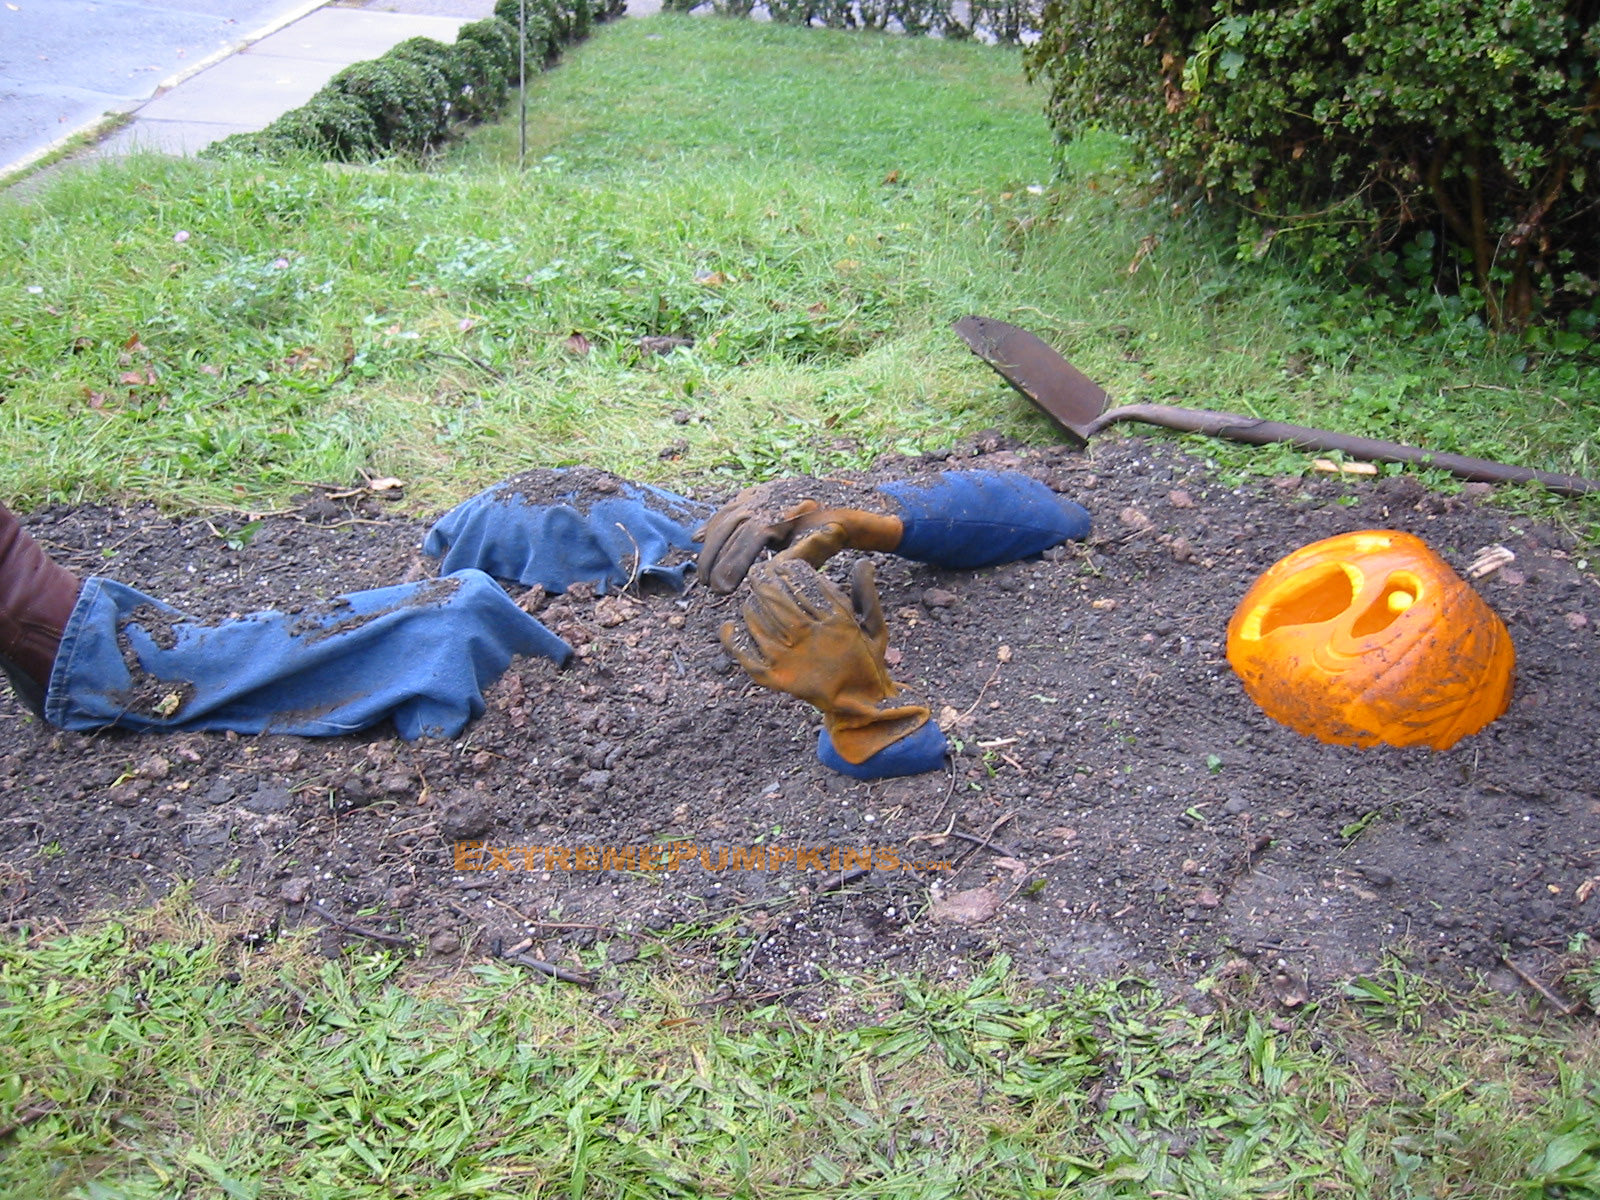 The Buried Alive Pumpkin Scene